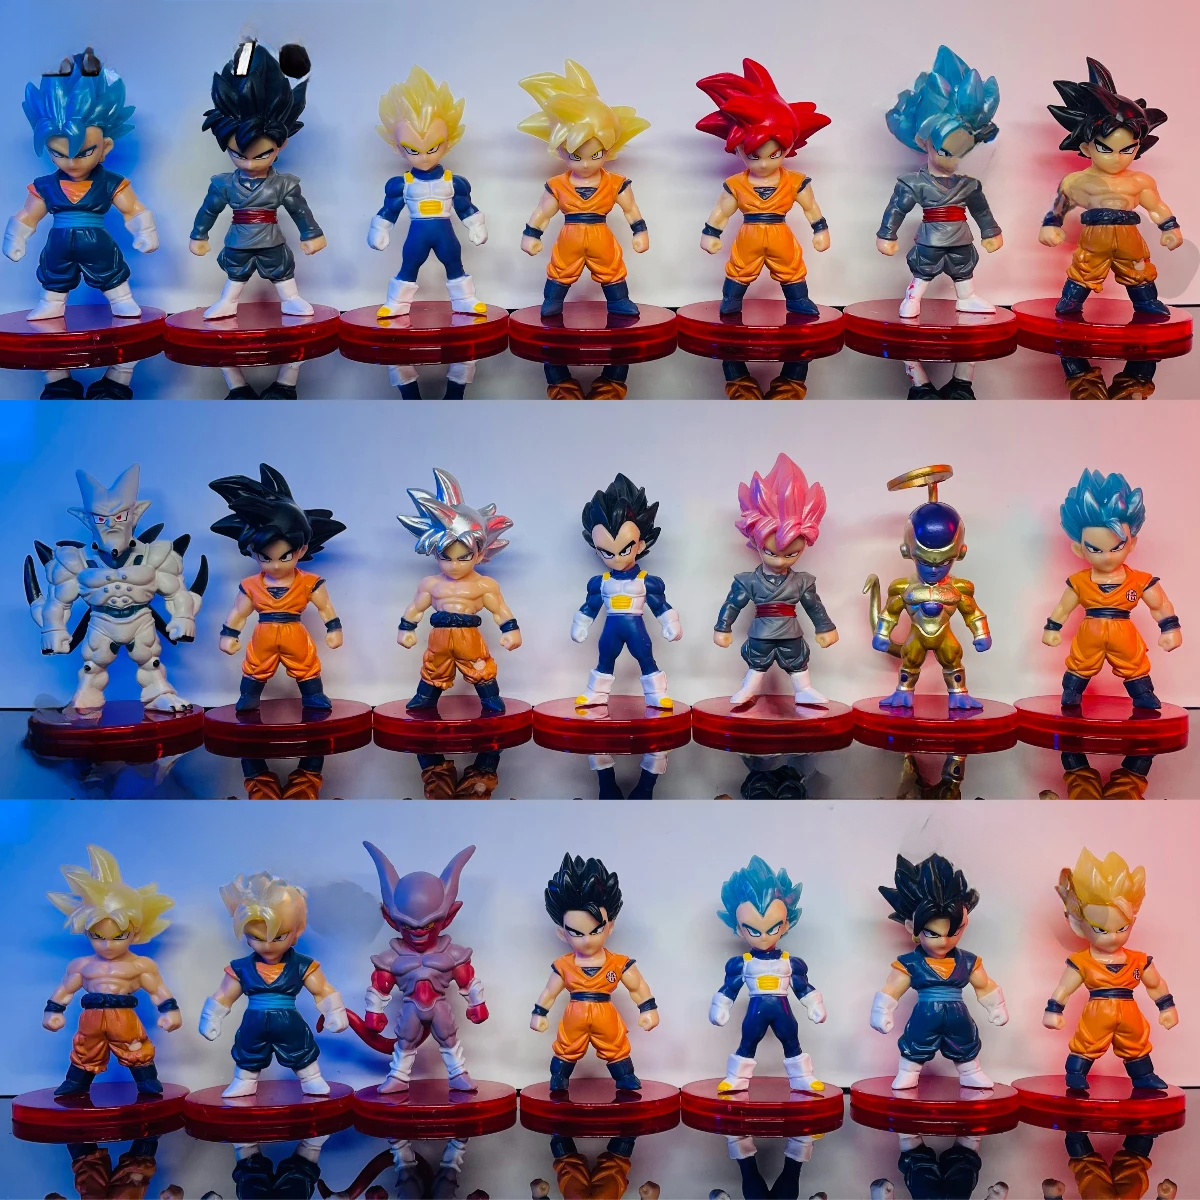 Dragon Ball Z Super Saiyan Son Goku Action Figure Set Collectible Anime Model Gifts for Fans